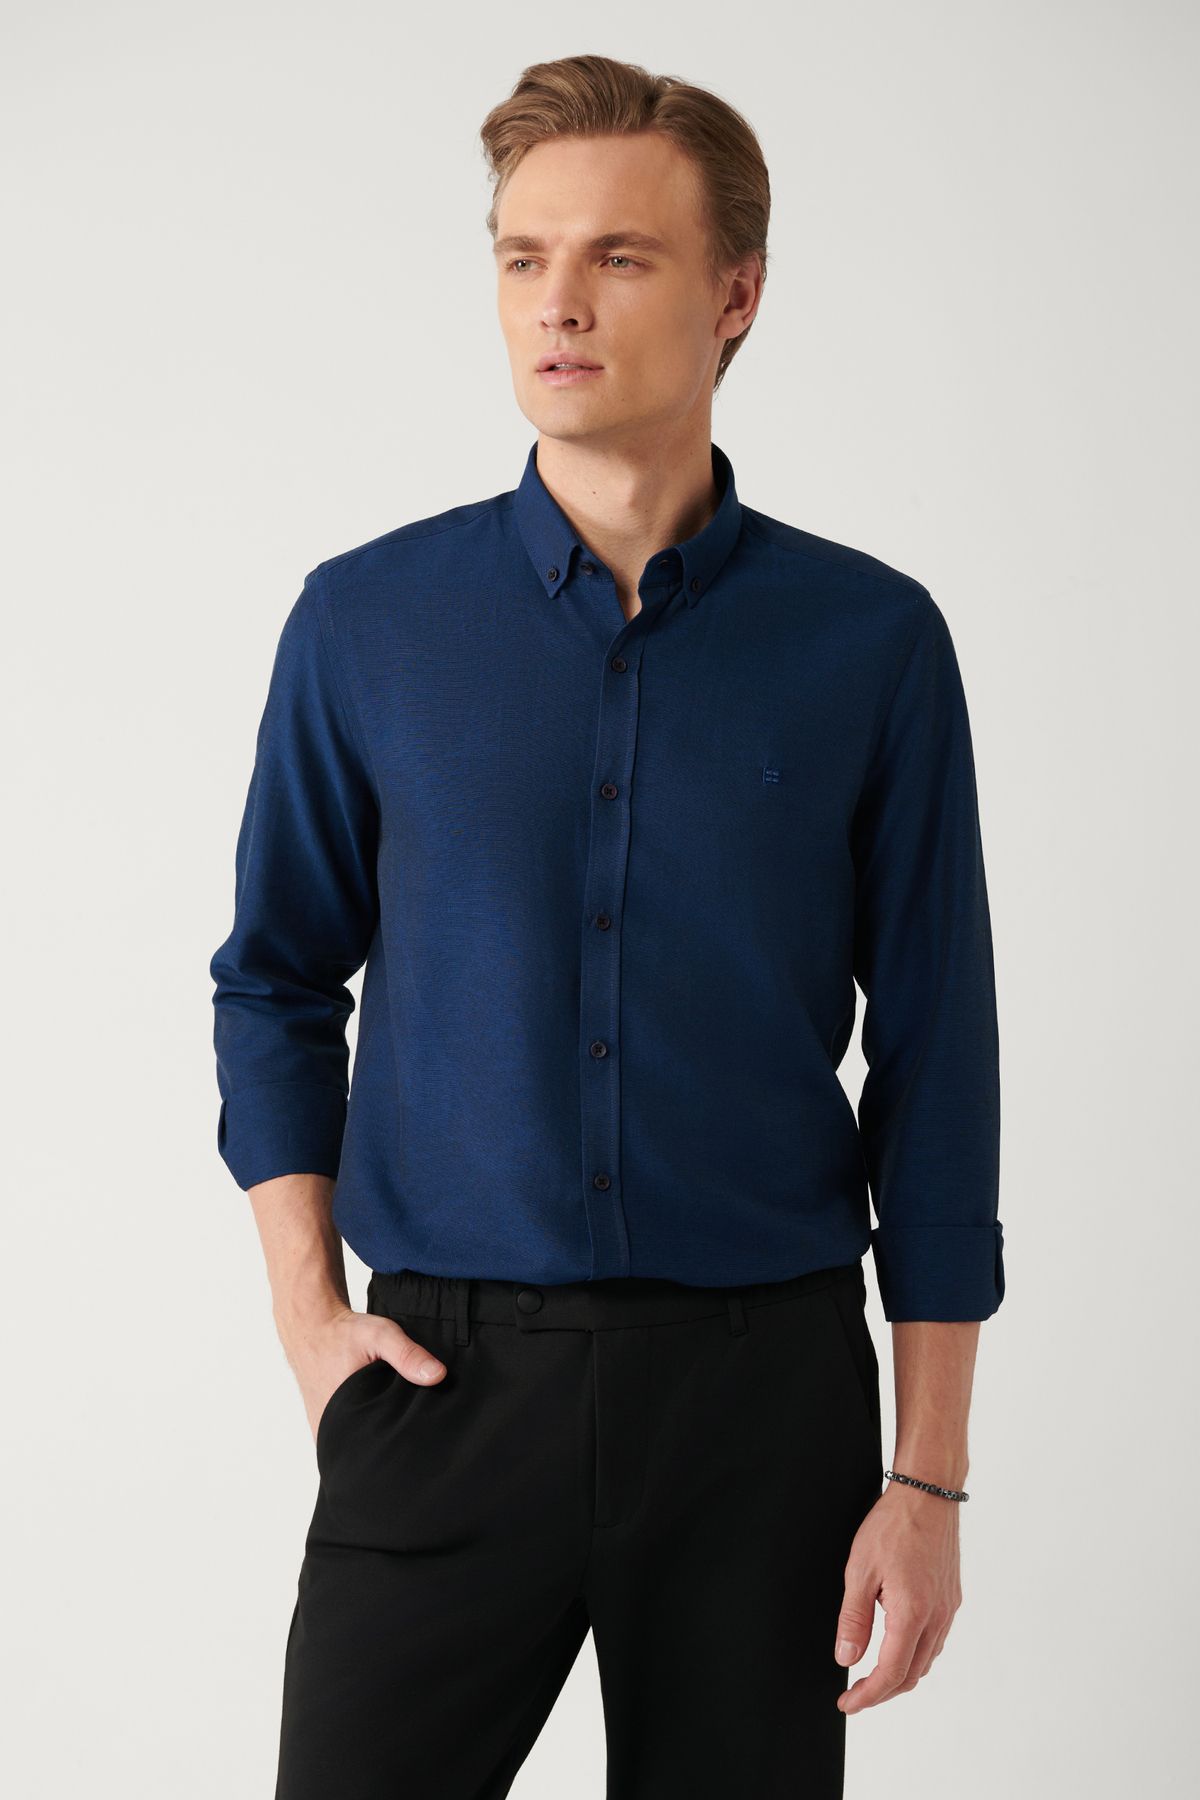 Avva پیراهن مردانه یقه آبی دکمه‌دار آسان اتوی آکسفورد با برش معمولی تناسب استاندارد E0020